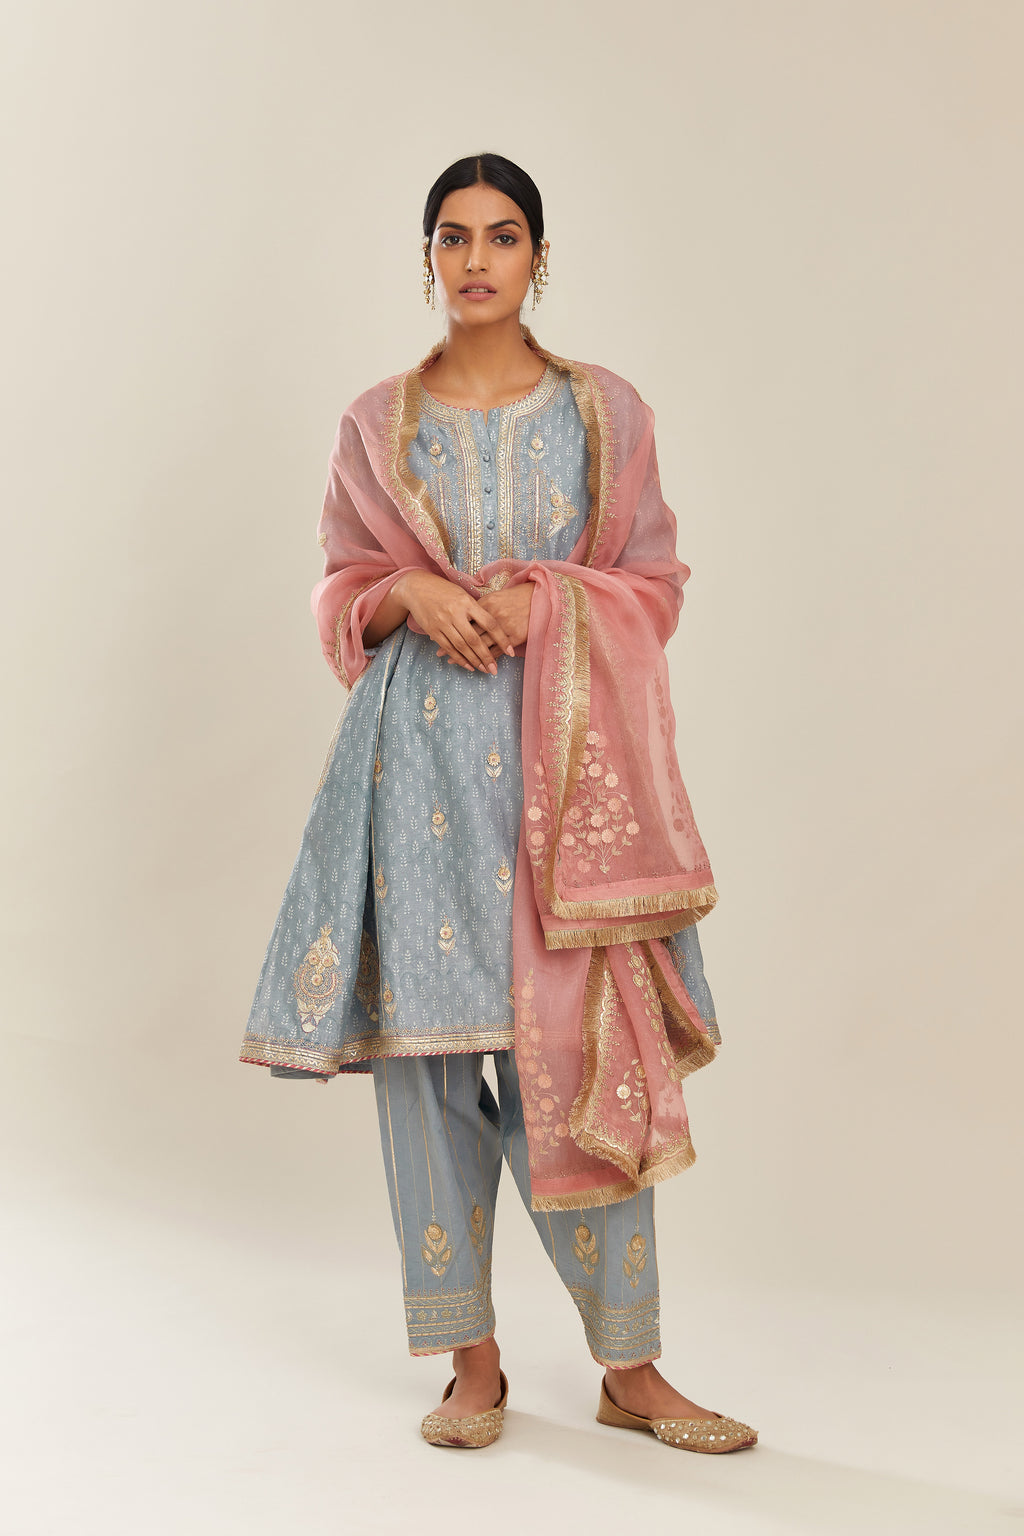 Powder blue hand block printed short kalidar silk chanderi kurta set with button placket and all over gold gota and zari embroidery.